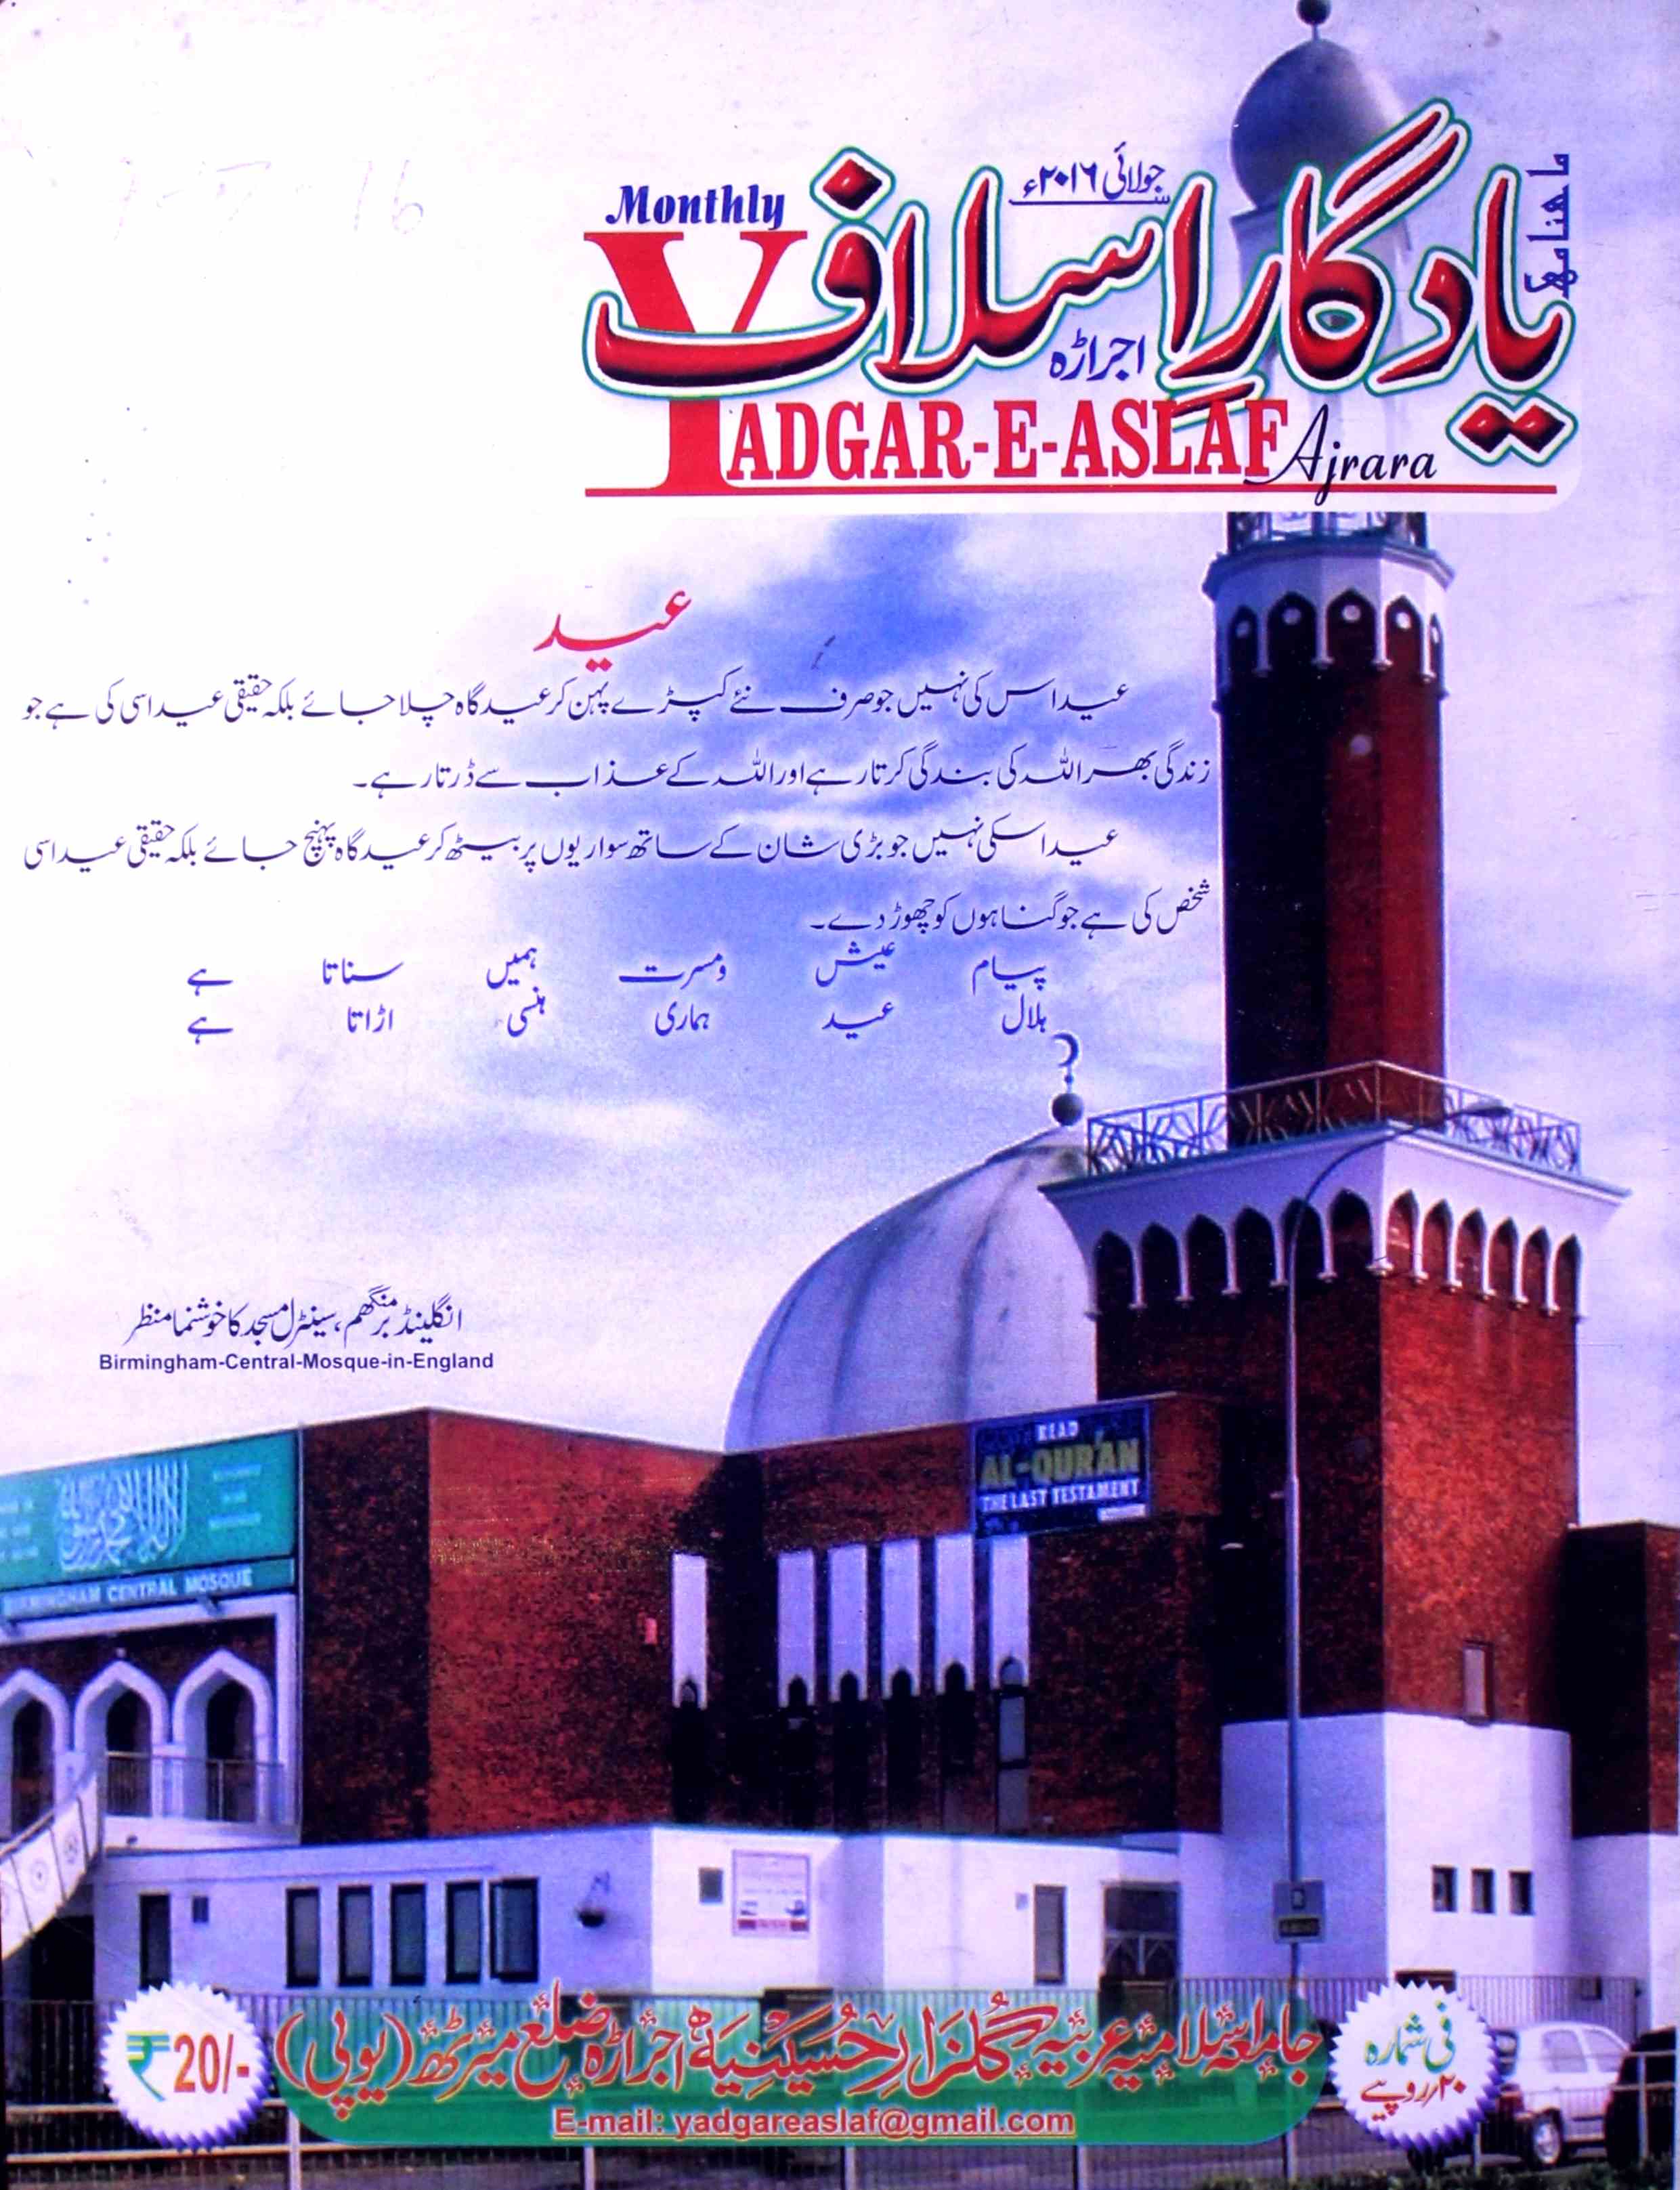 Yadgar-e-Aslaf